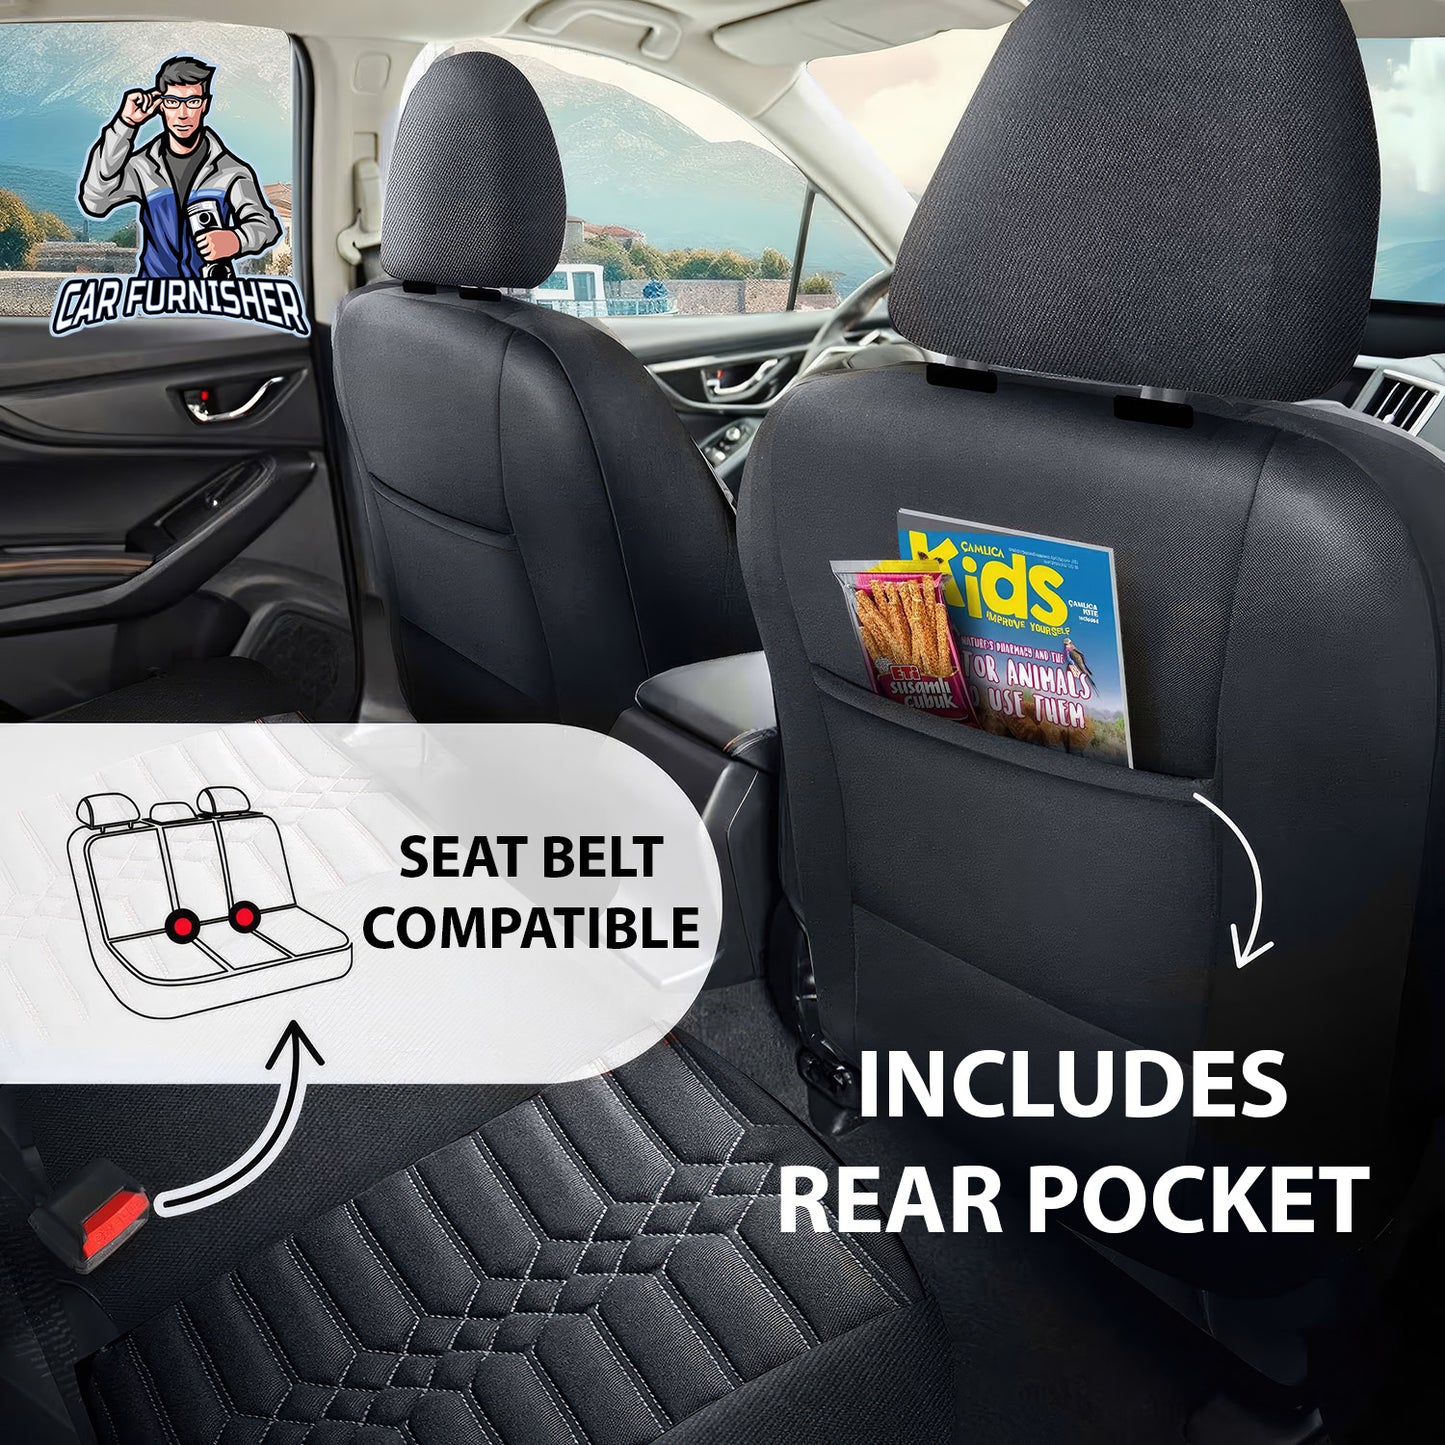 Car Seat Cover Set - Athens Design Gray 5 Seats + Headrests (Full Set) Leather & Jacquard Fabric